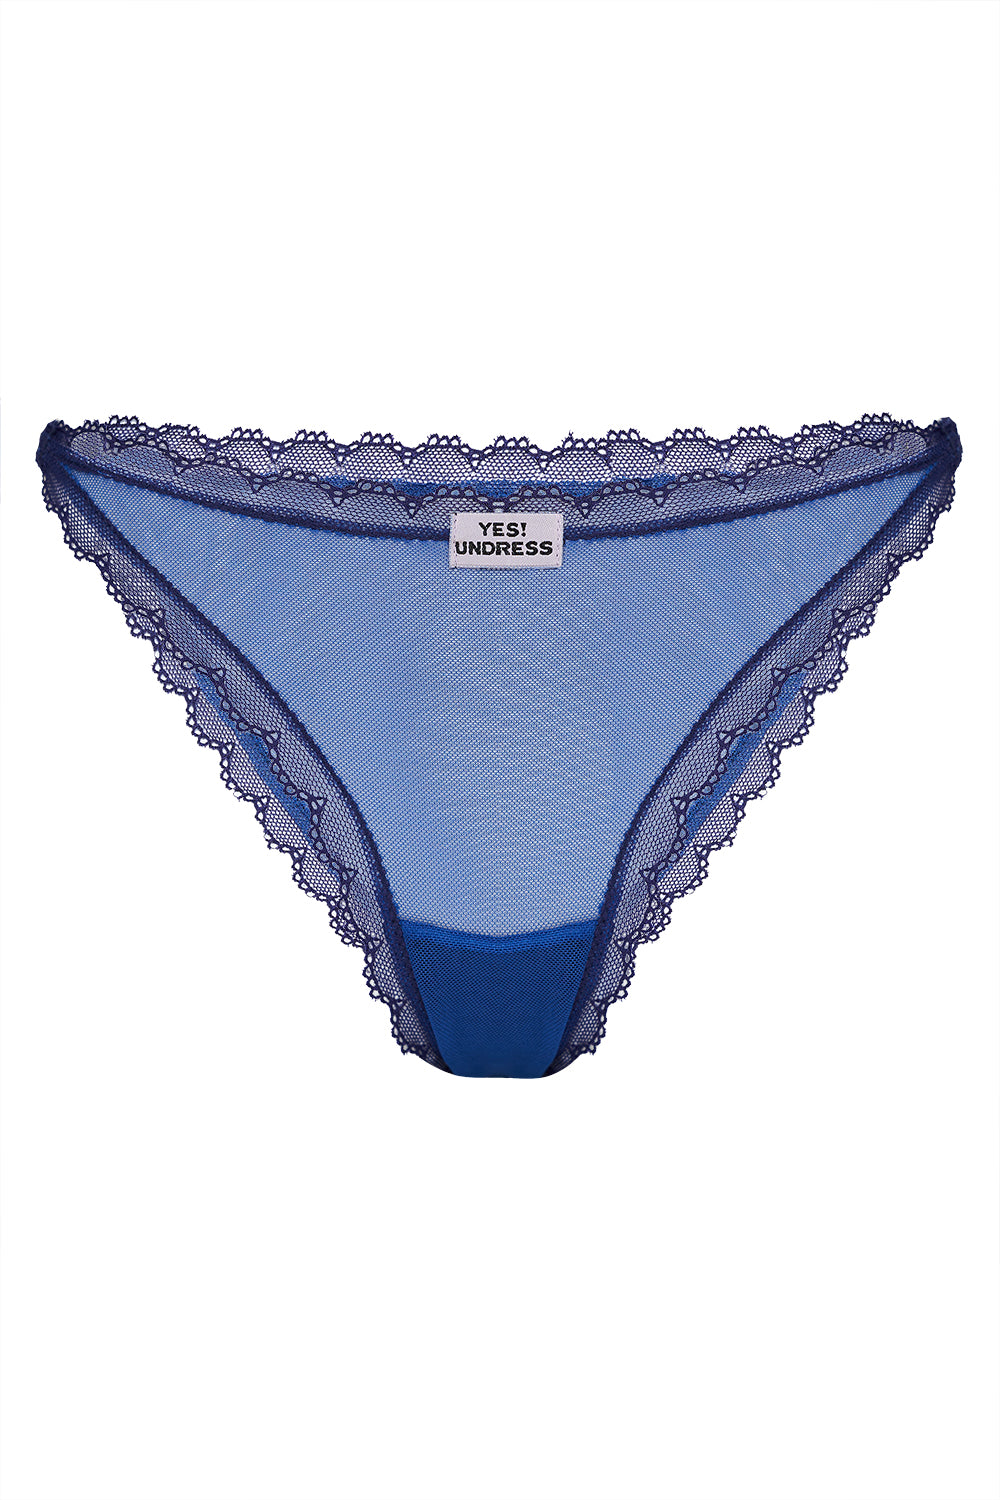 Amari blue panties